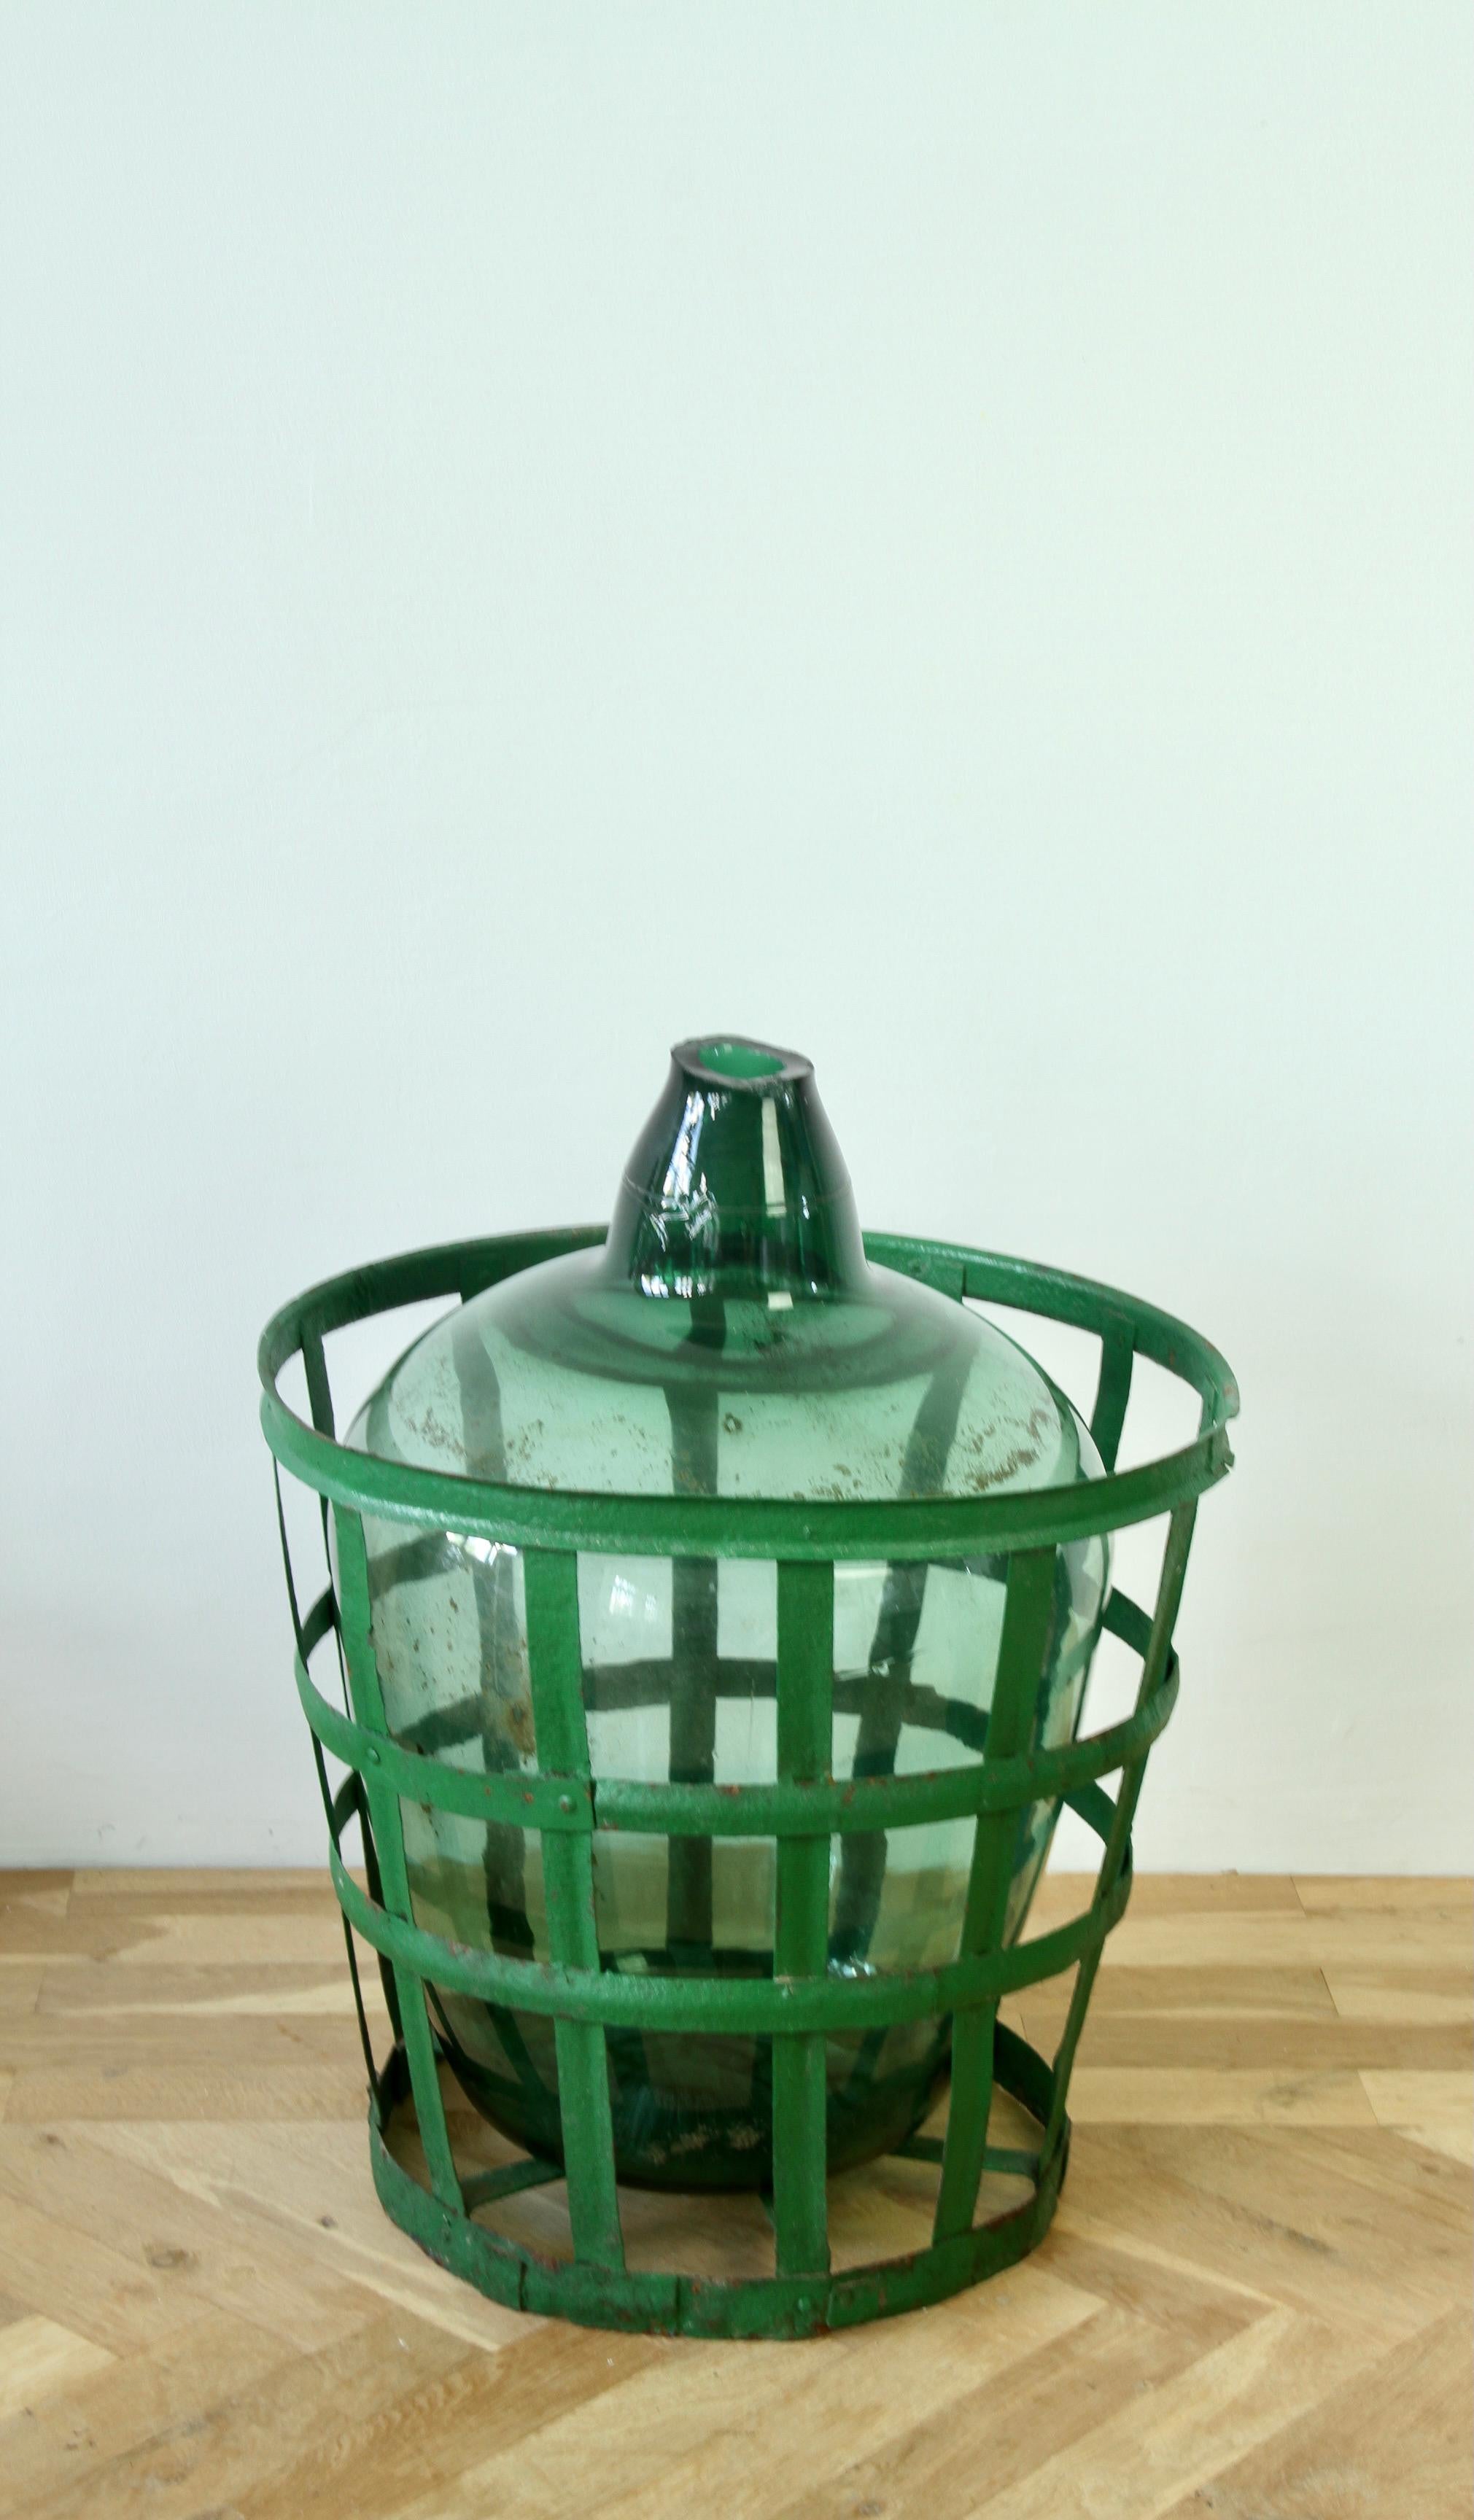 Hongrois Grand Demijohn, Amphora ou Vase hongrois en verre vert avec panier en fer d'origine en vente